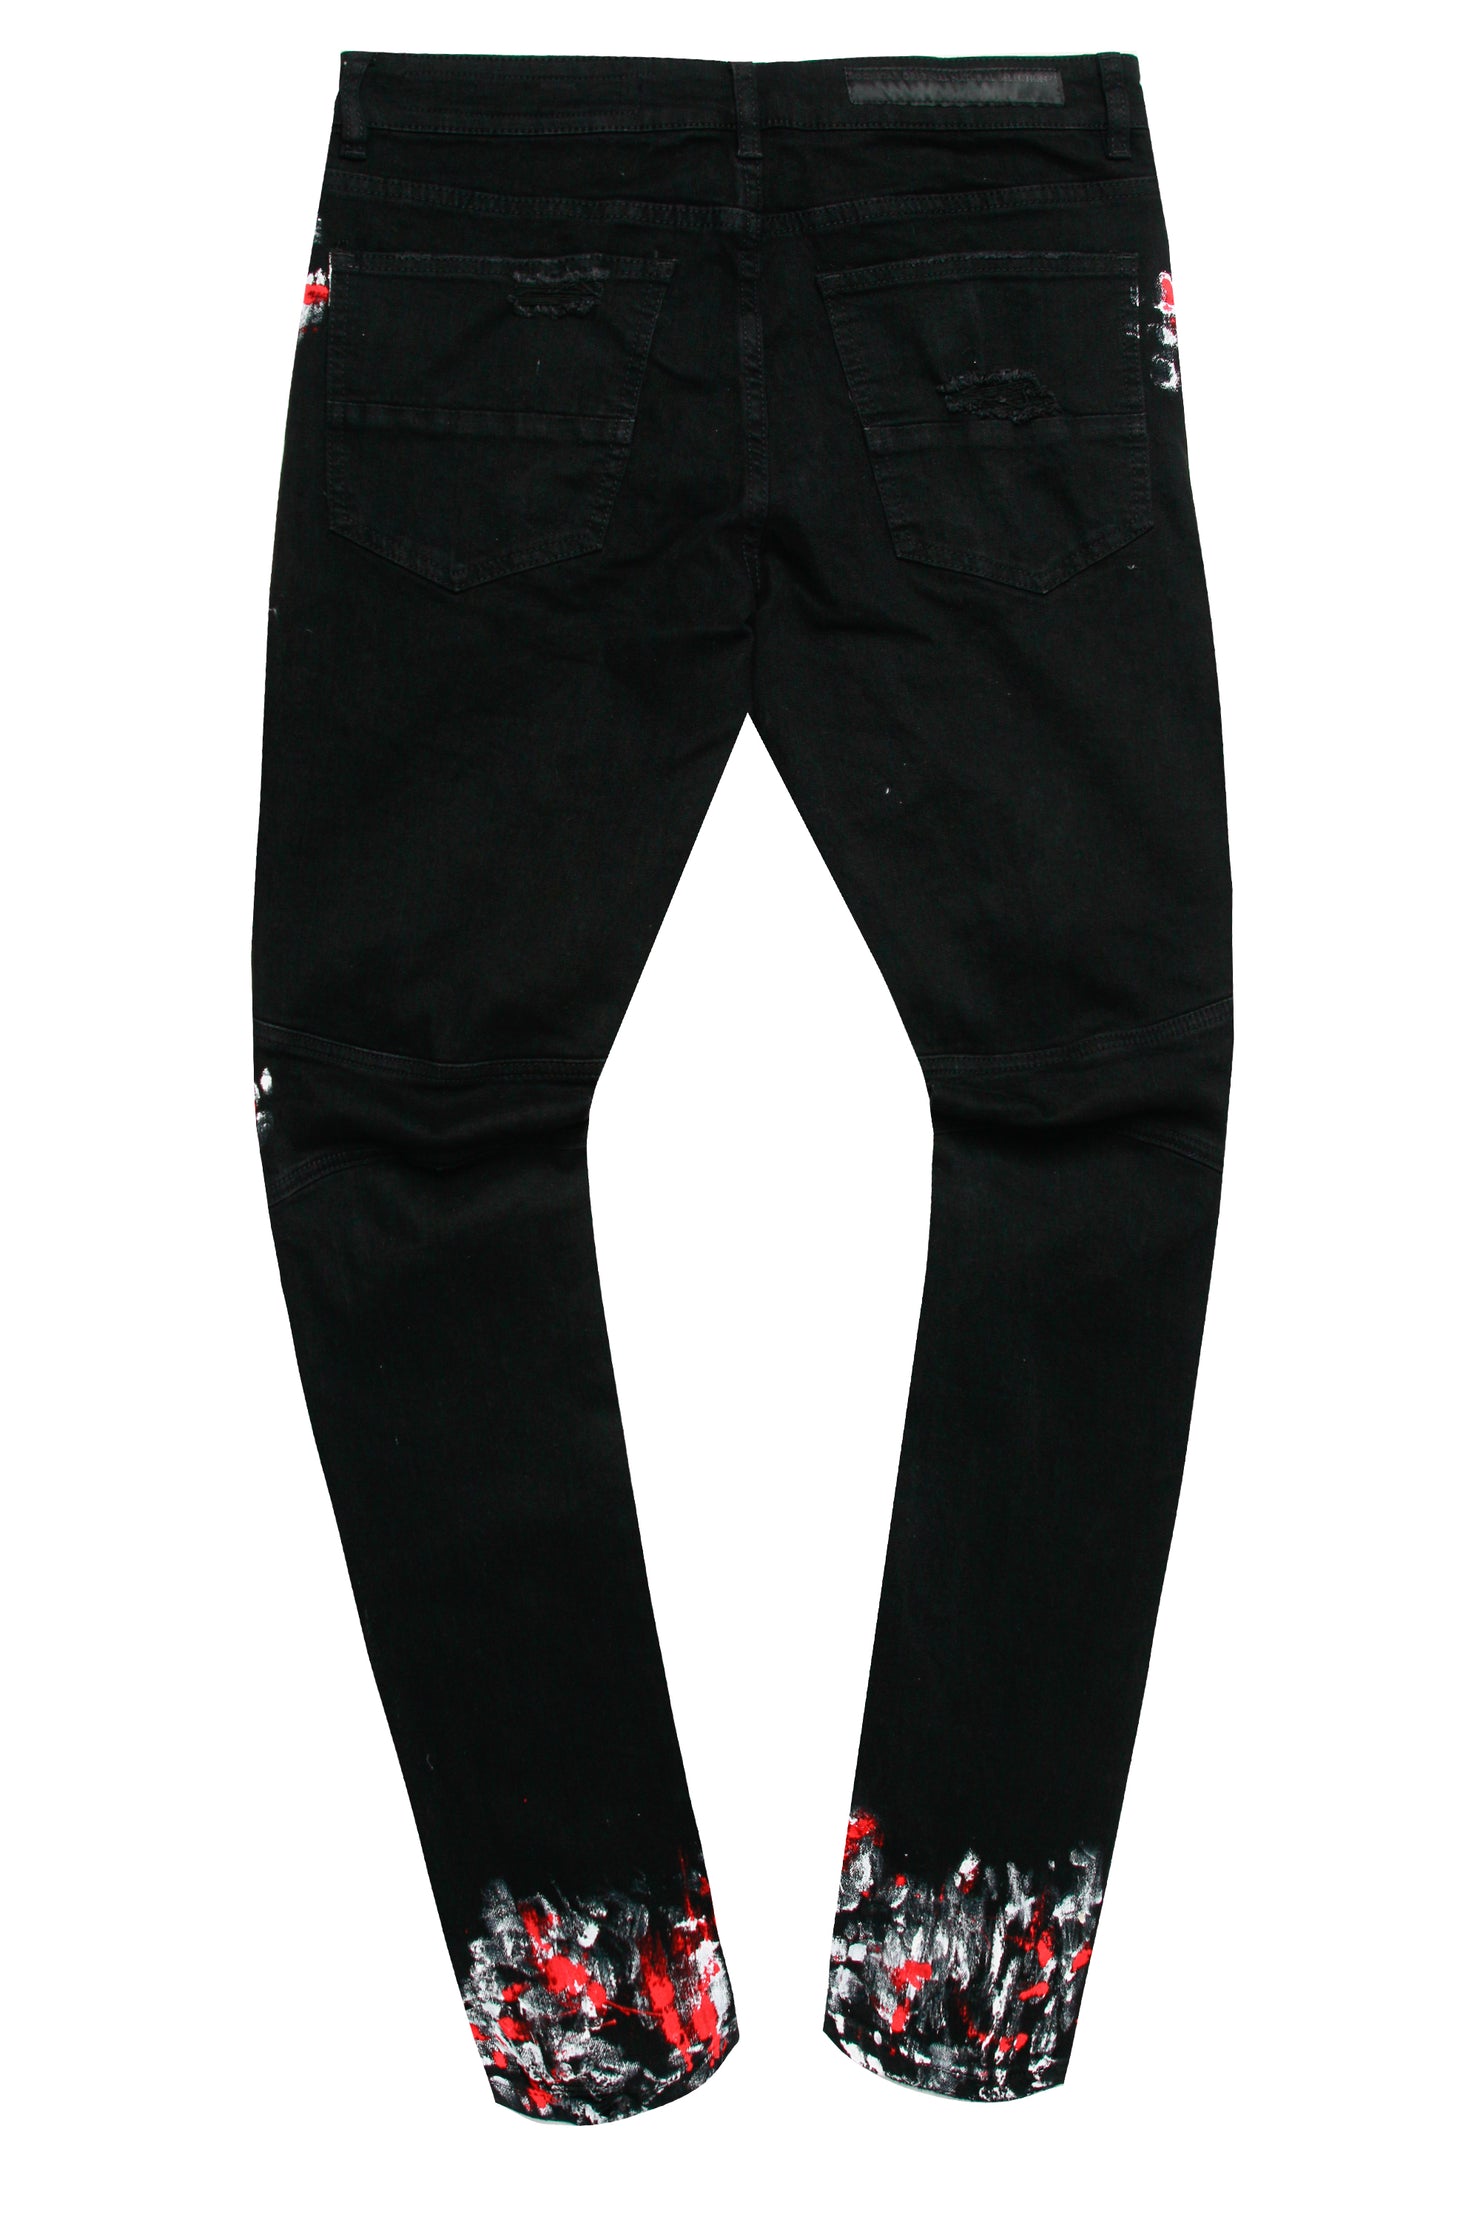 Rockstar Original, Jeans, Rockstar Original Red Lettering Embroidery Black  Denim Jeans